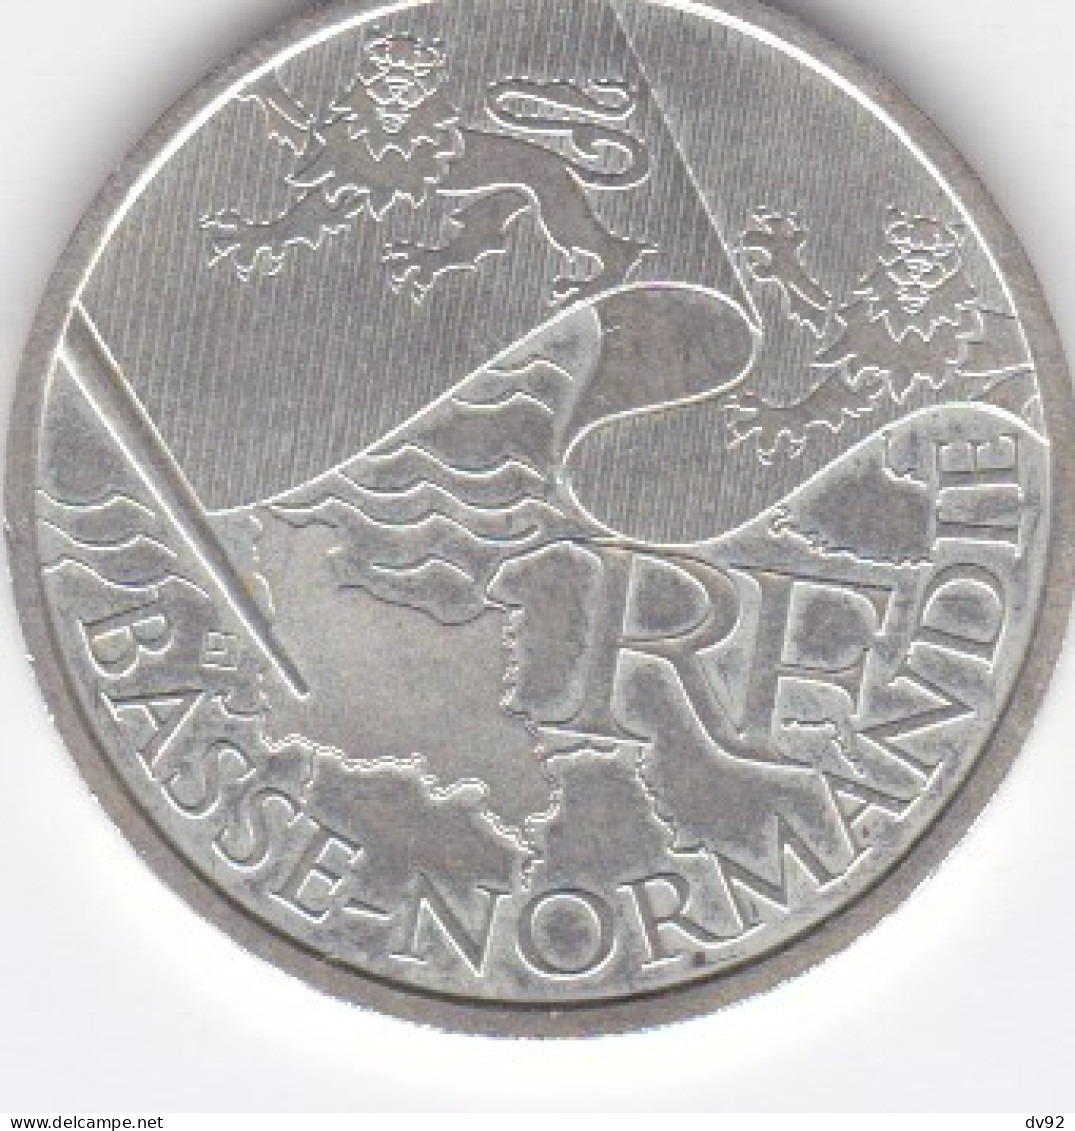 FRANCE 10 EUROS BASSE NORMANDIE - Francia